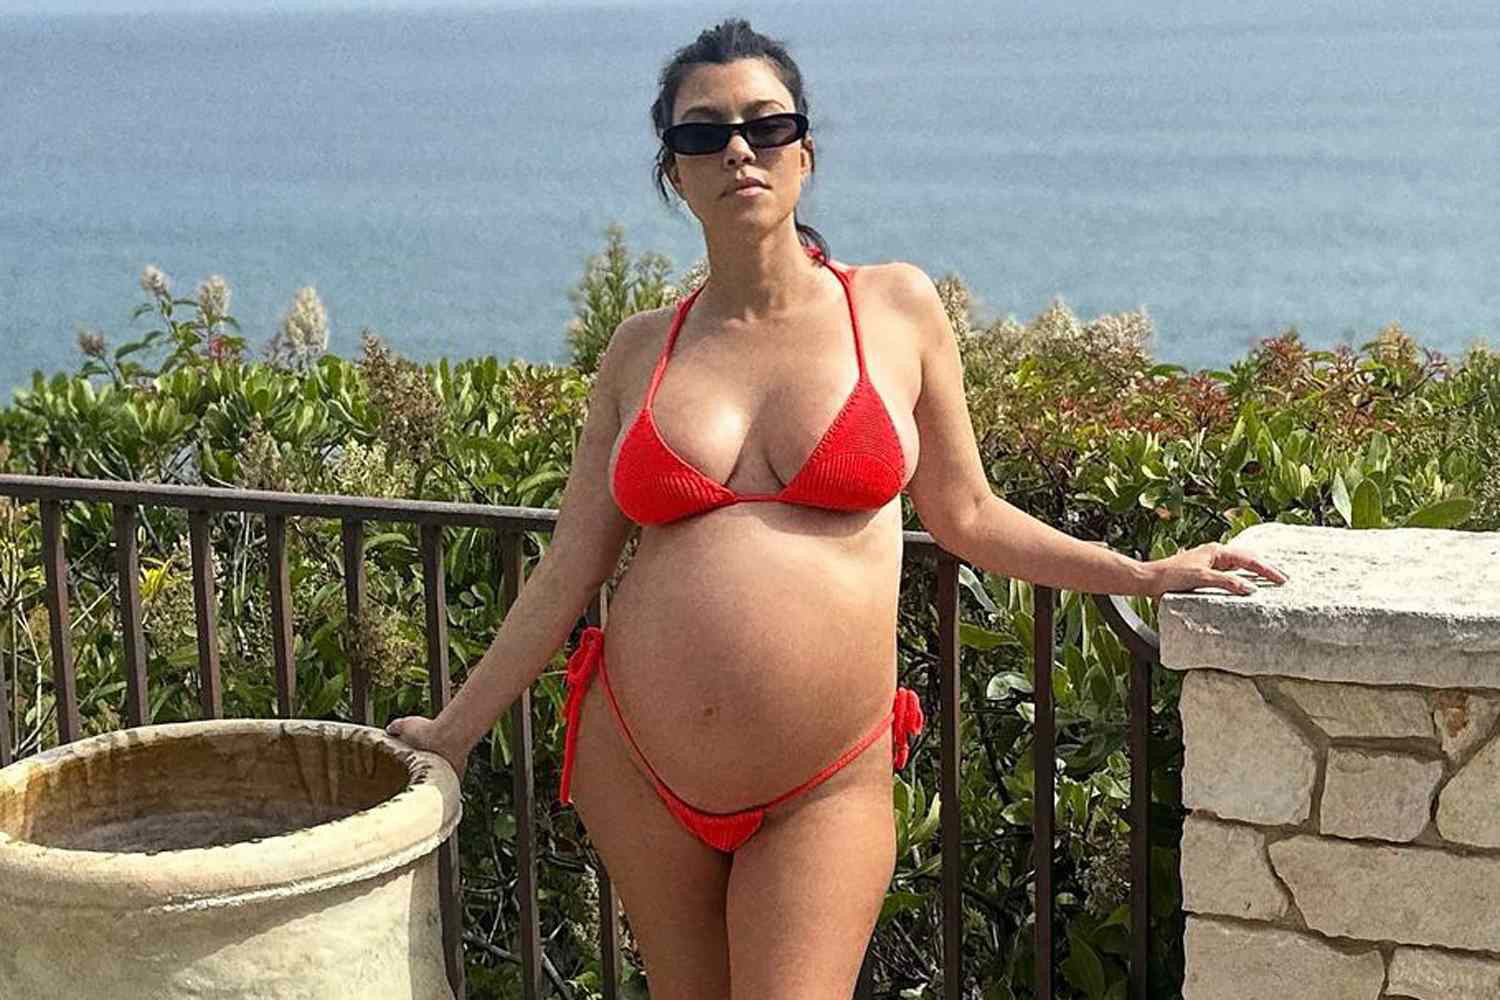 Kourtney Kardashian wearing a red bikini while being pregnant 